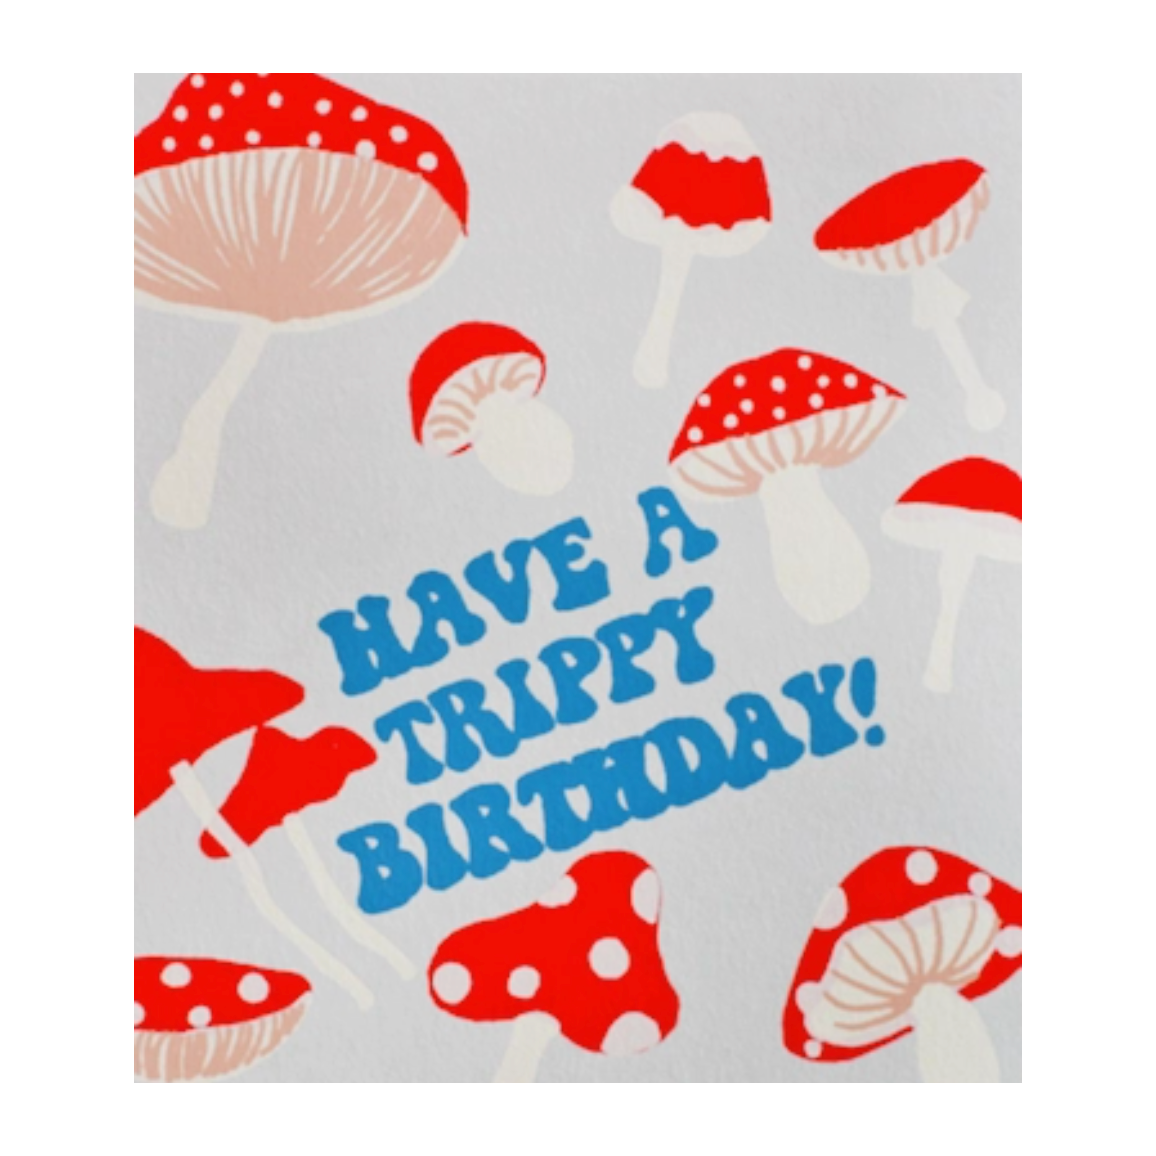 trippy birthday greeting card